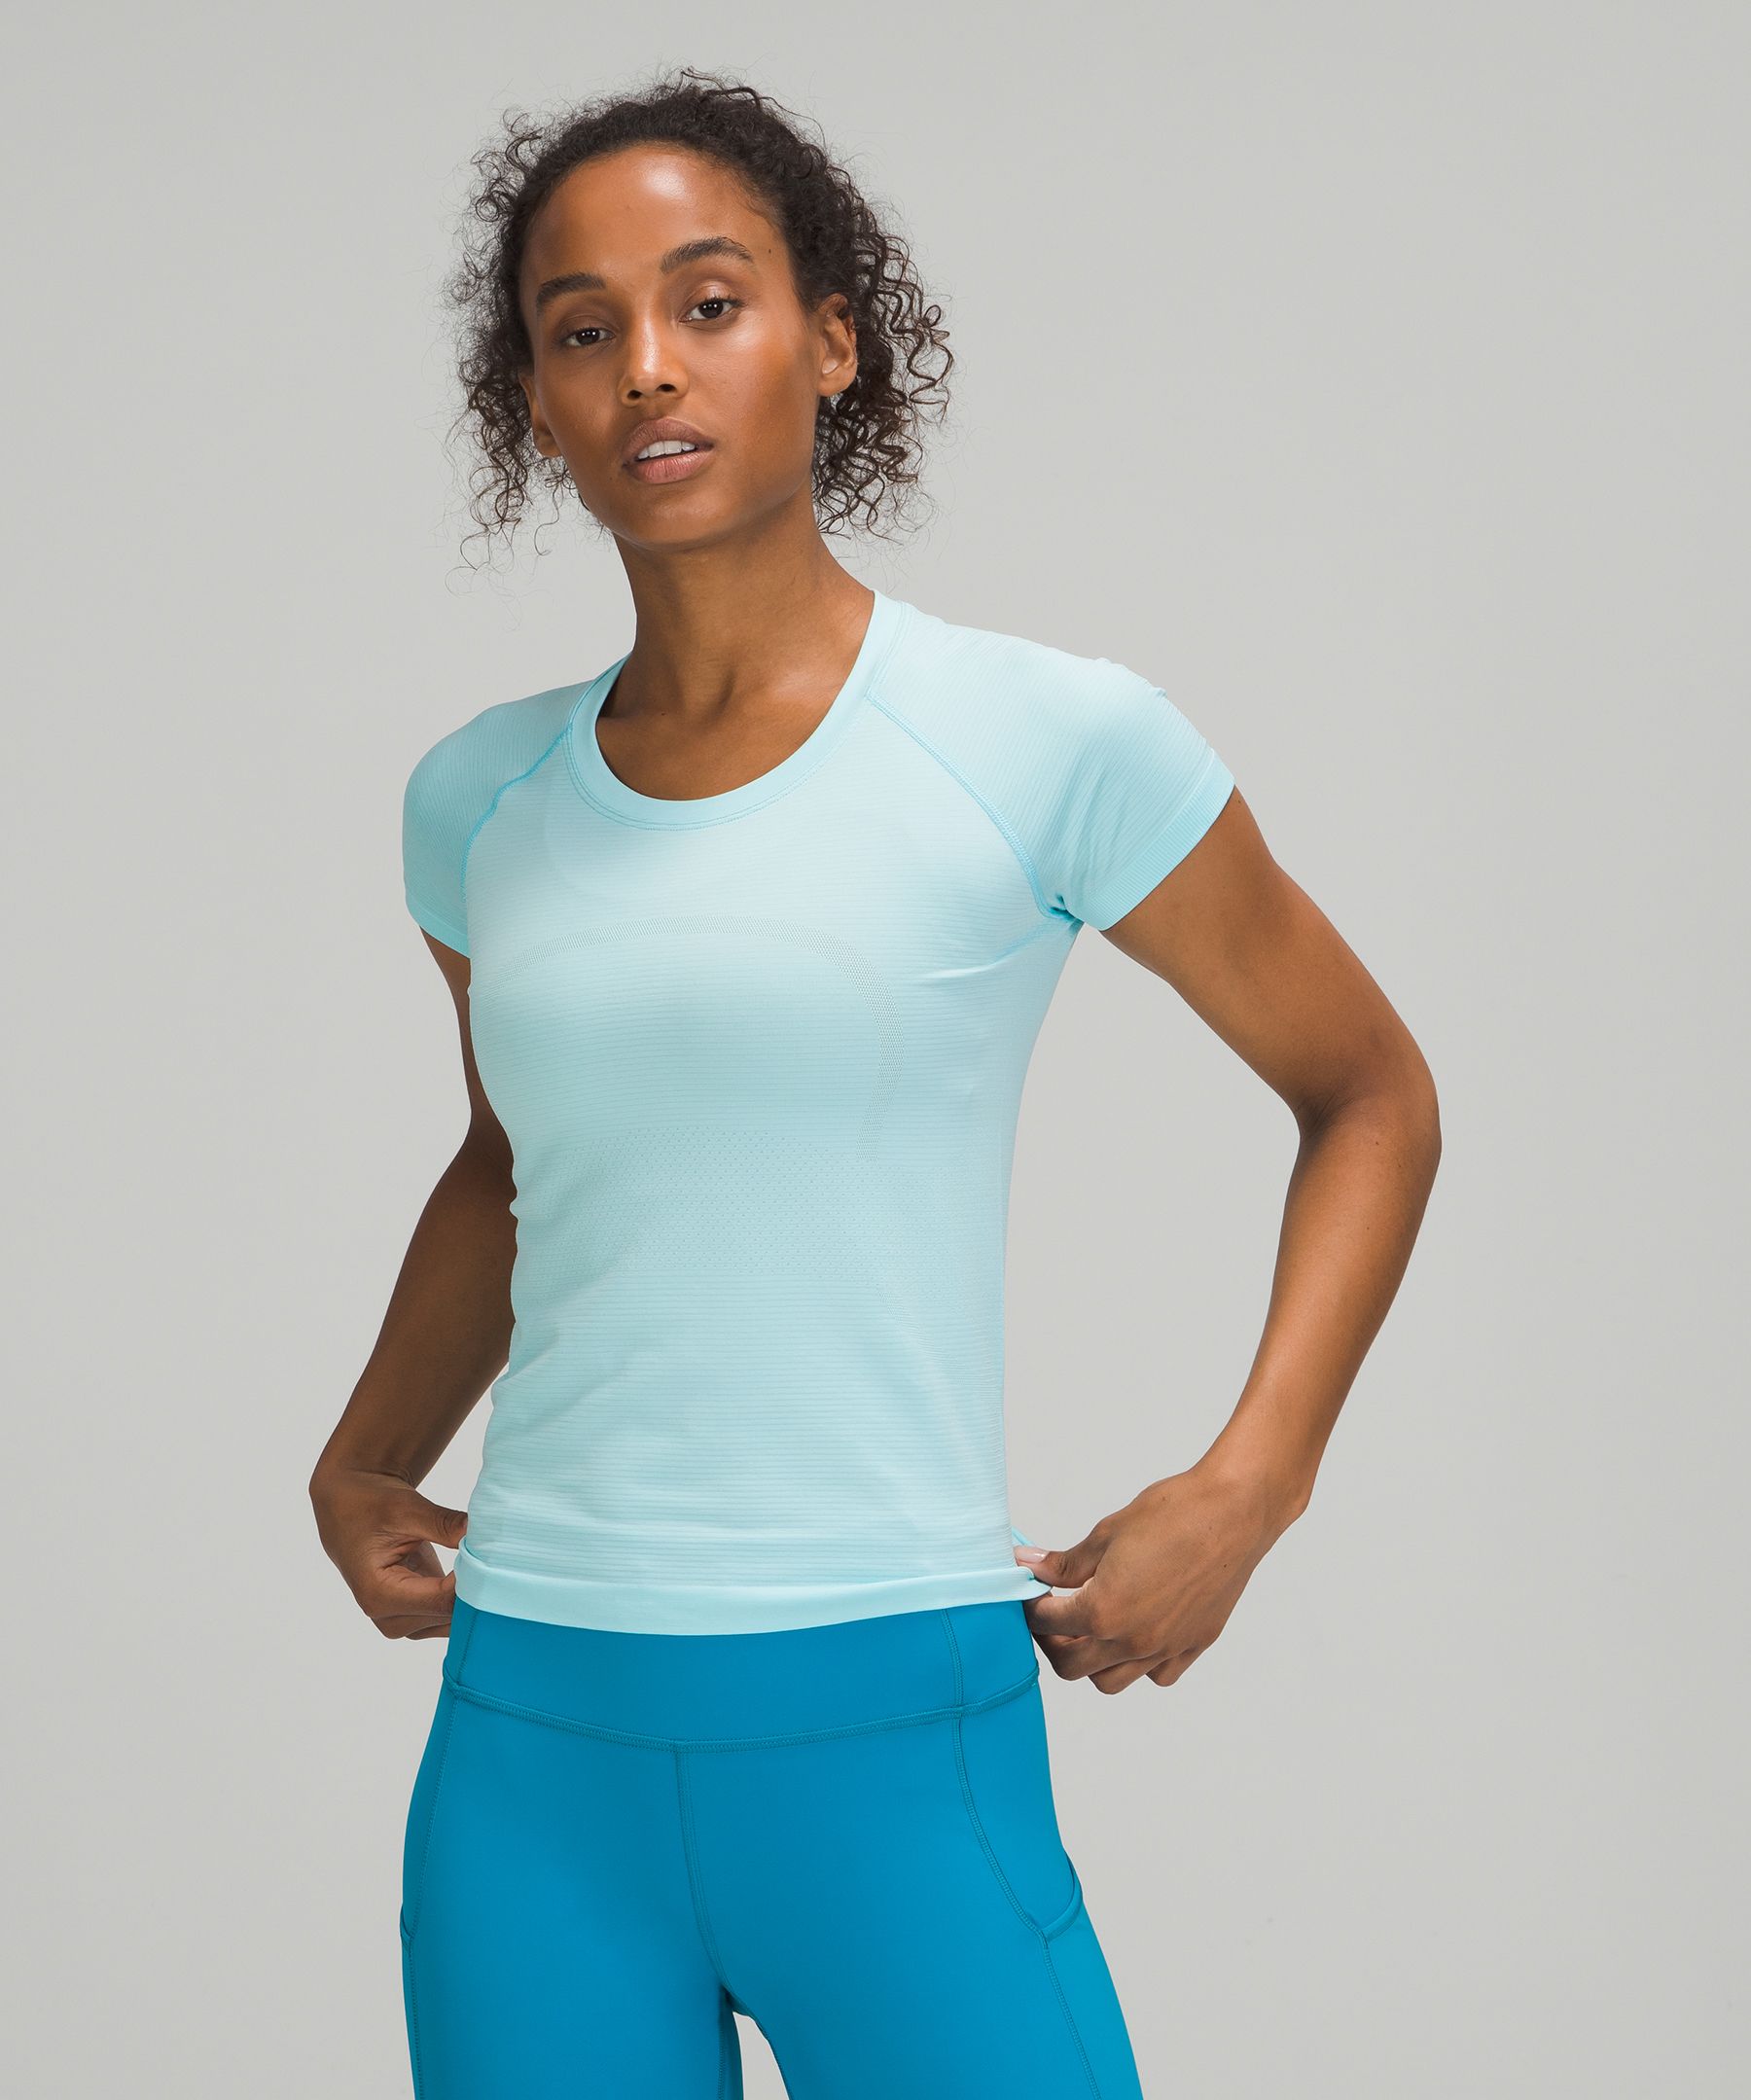 lululemon athletica Swiftly Tech Long-sleeve Shirt 2.0 Race Length in Blue